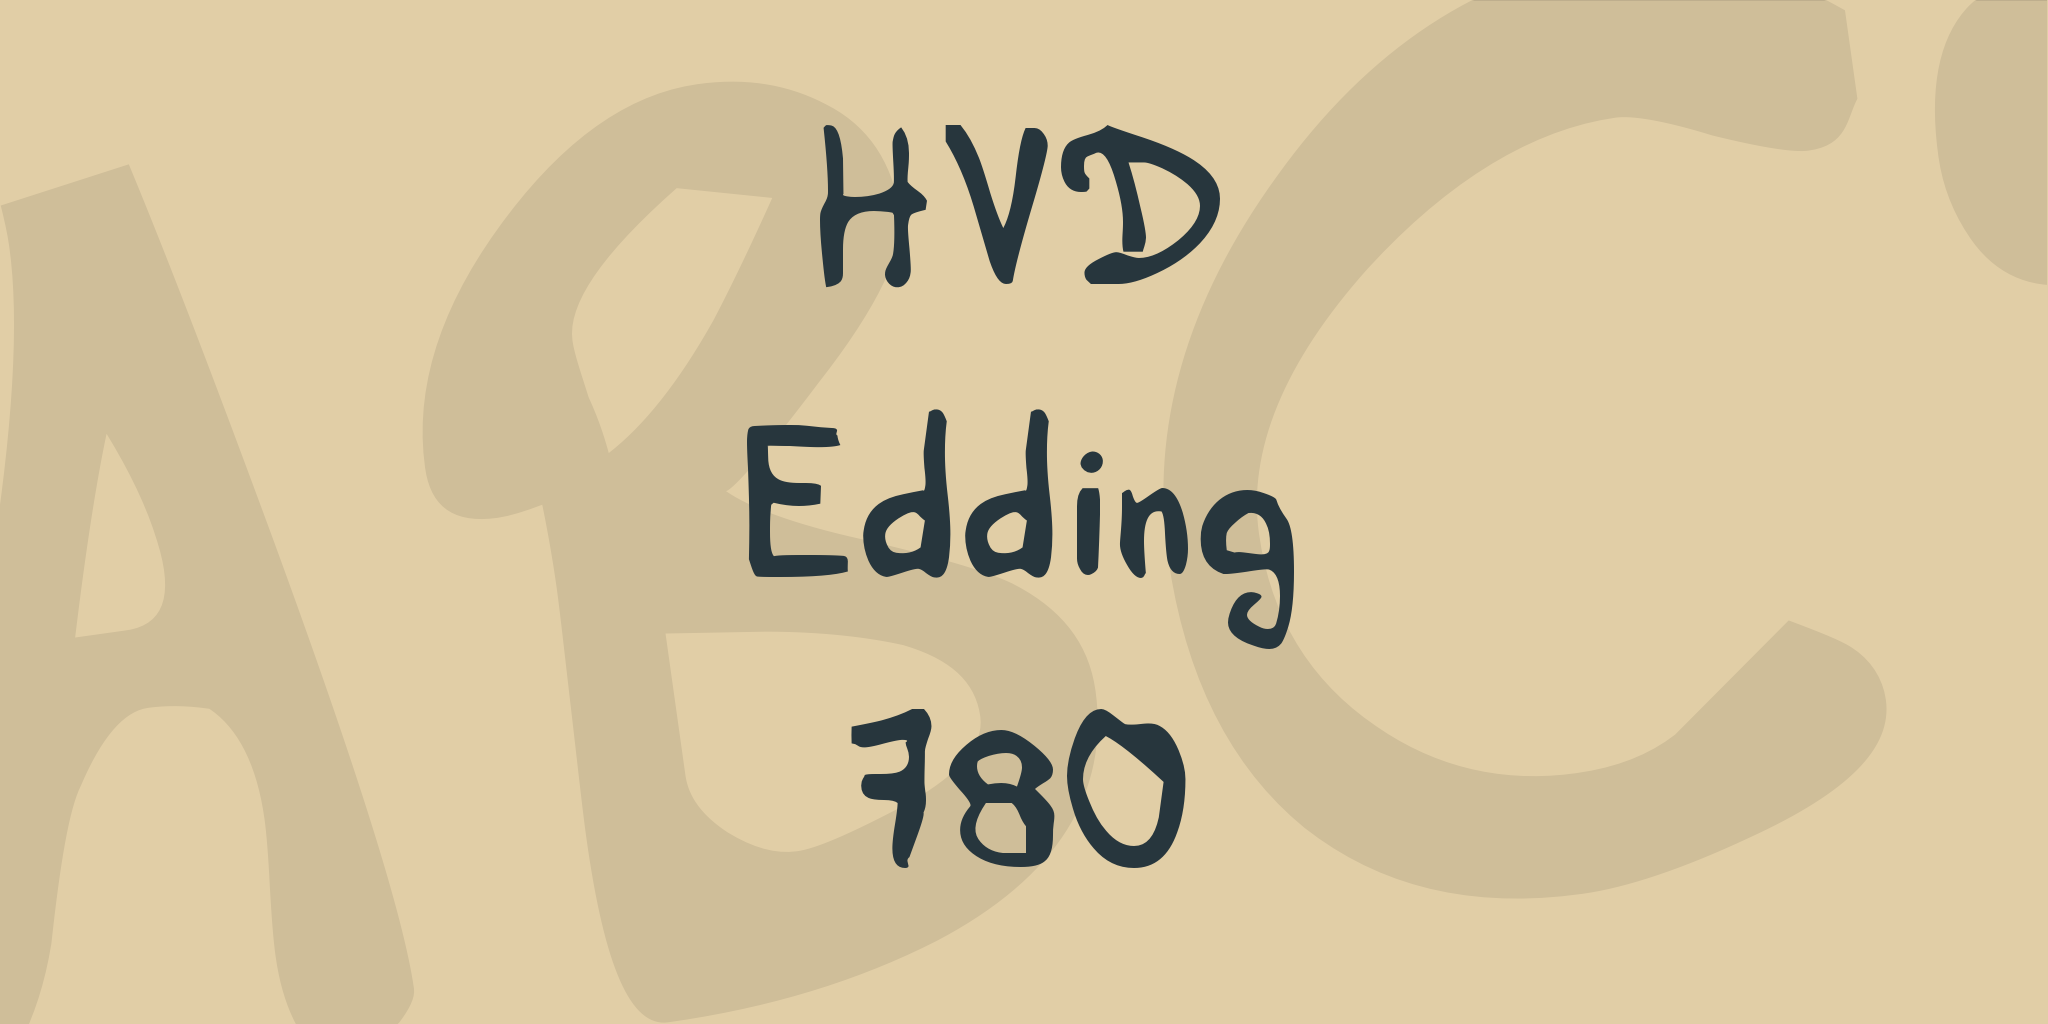 Hvd Edding 780